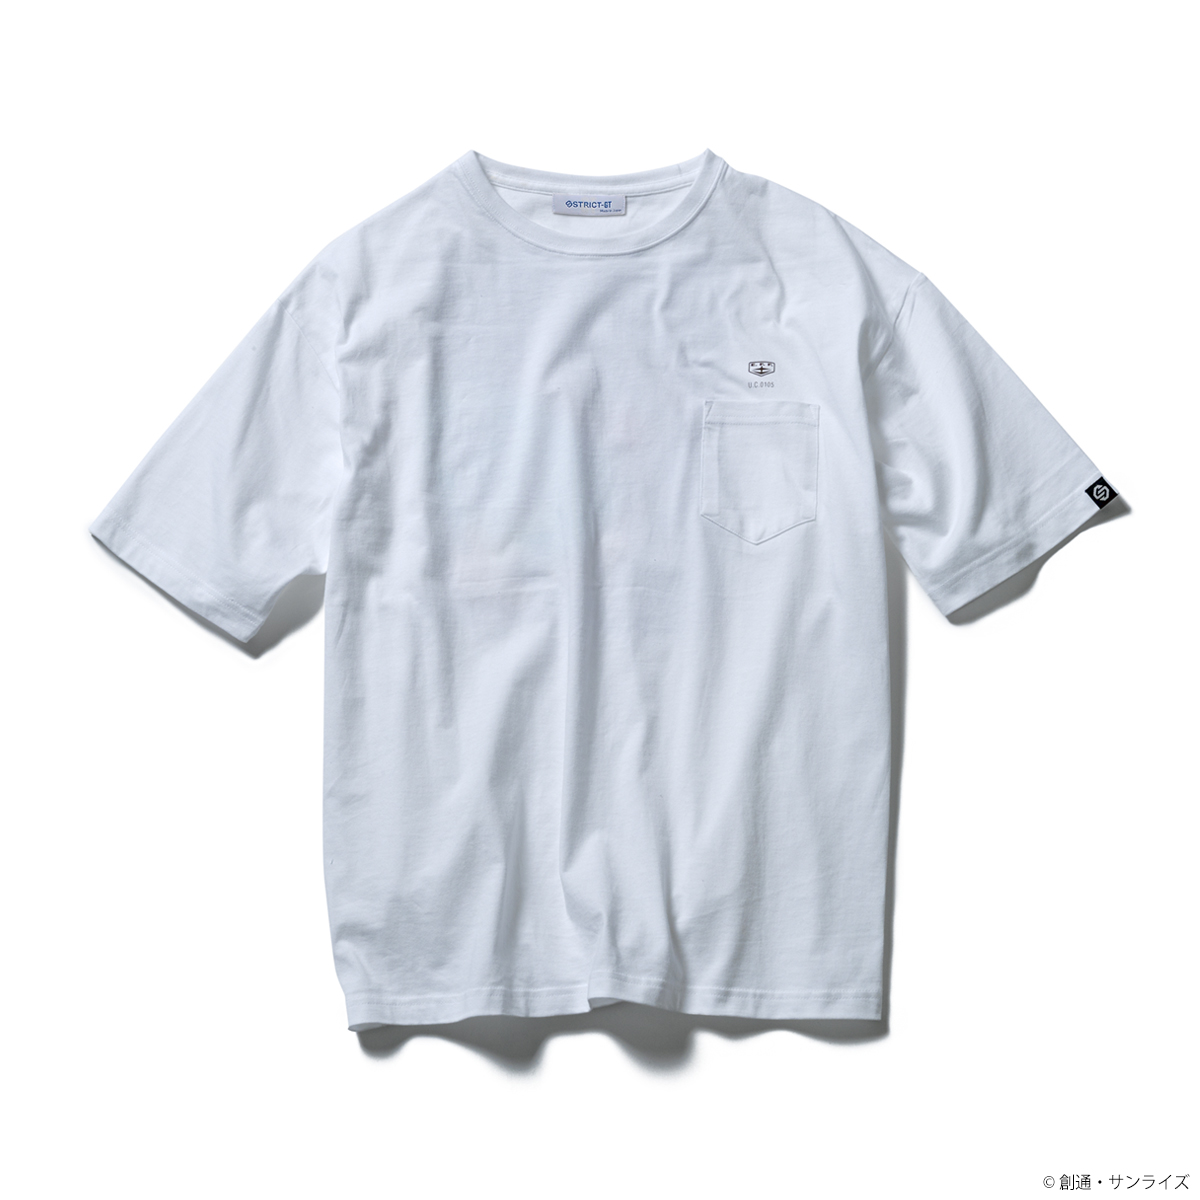 STRICT-G『機動戦士ガンダム 閃光のハサウェイ』 ポケット付きビッグTシャツ コンセプトビジュアル